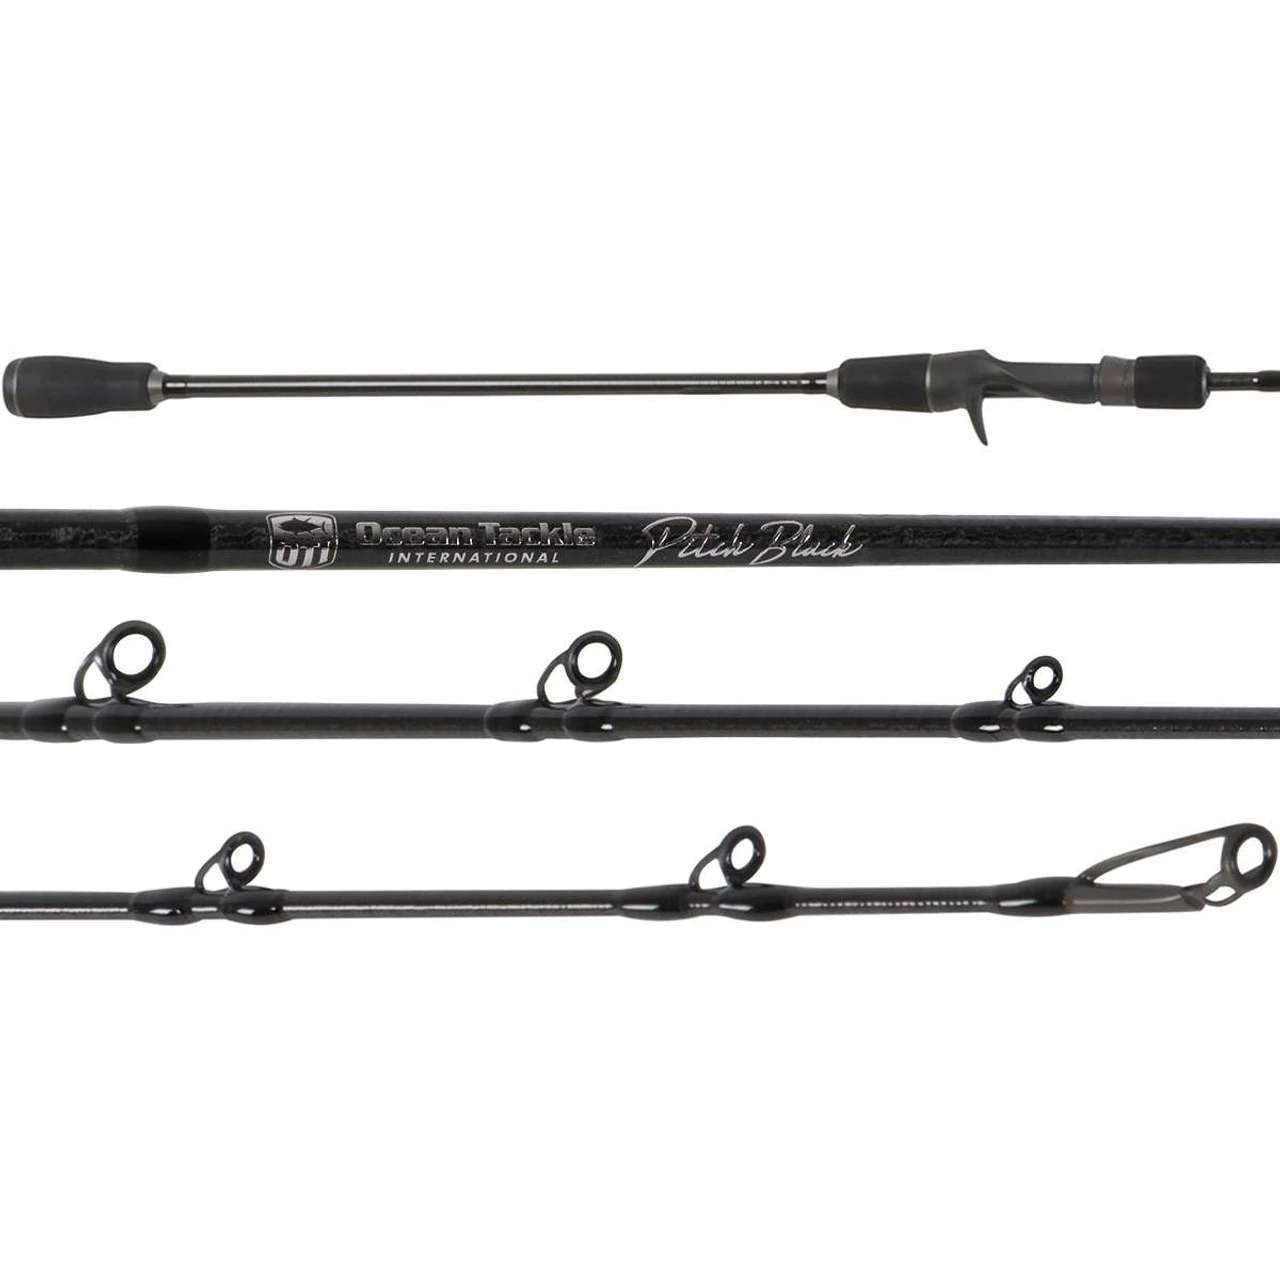 Ocean Tackle International Pitch Black Slow Pitch Jigging Rods 6'3 30-50lb 80-400G Casting